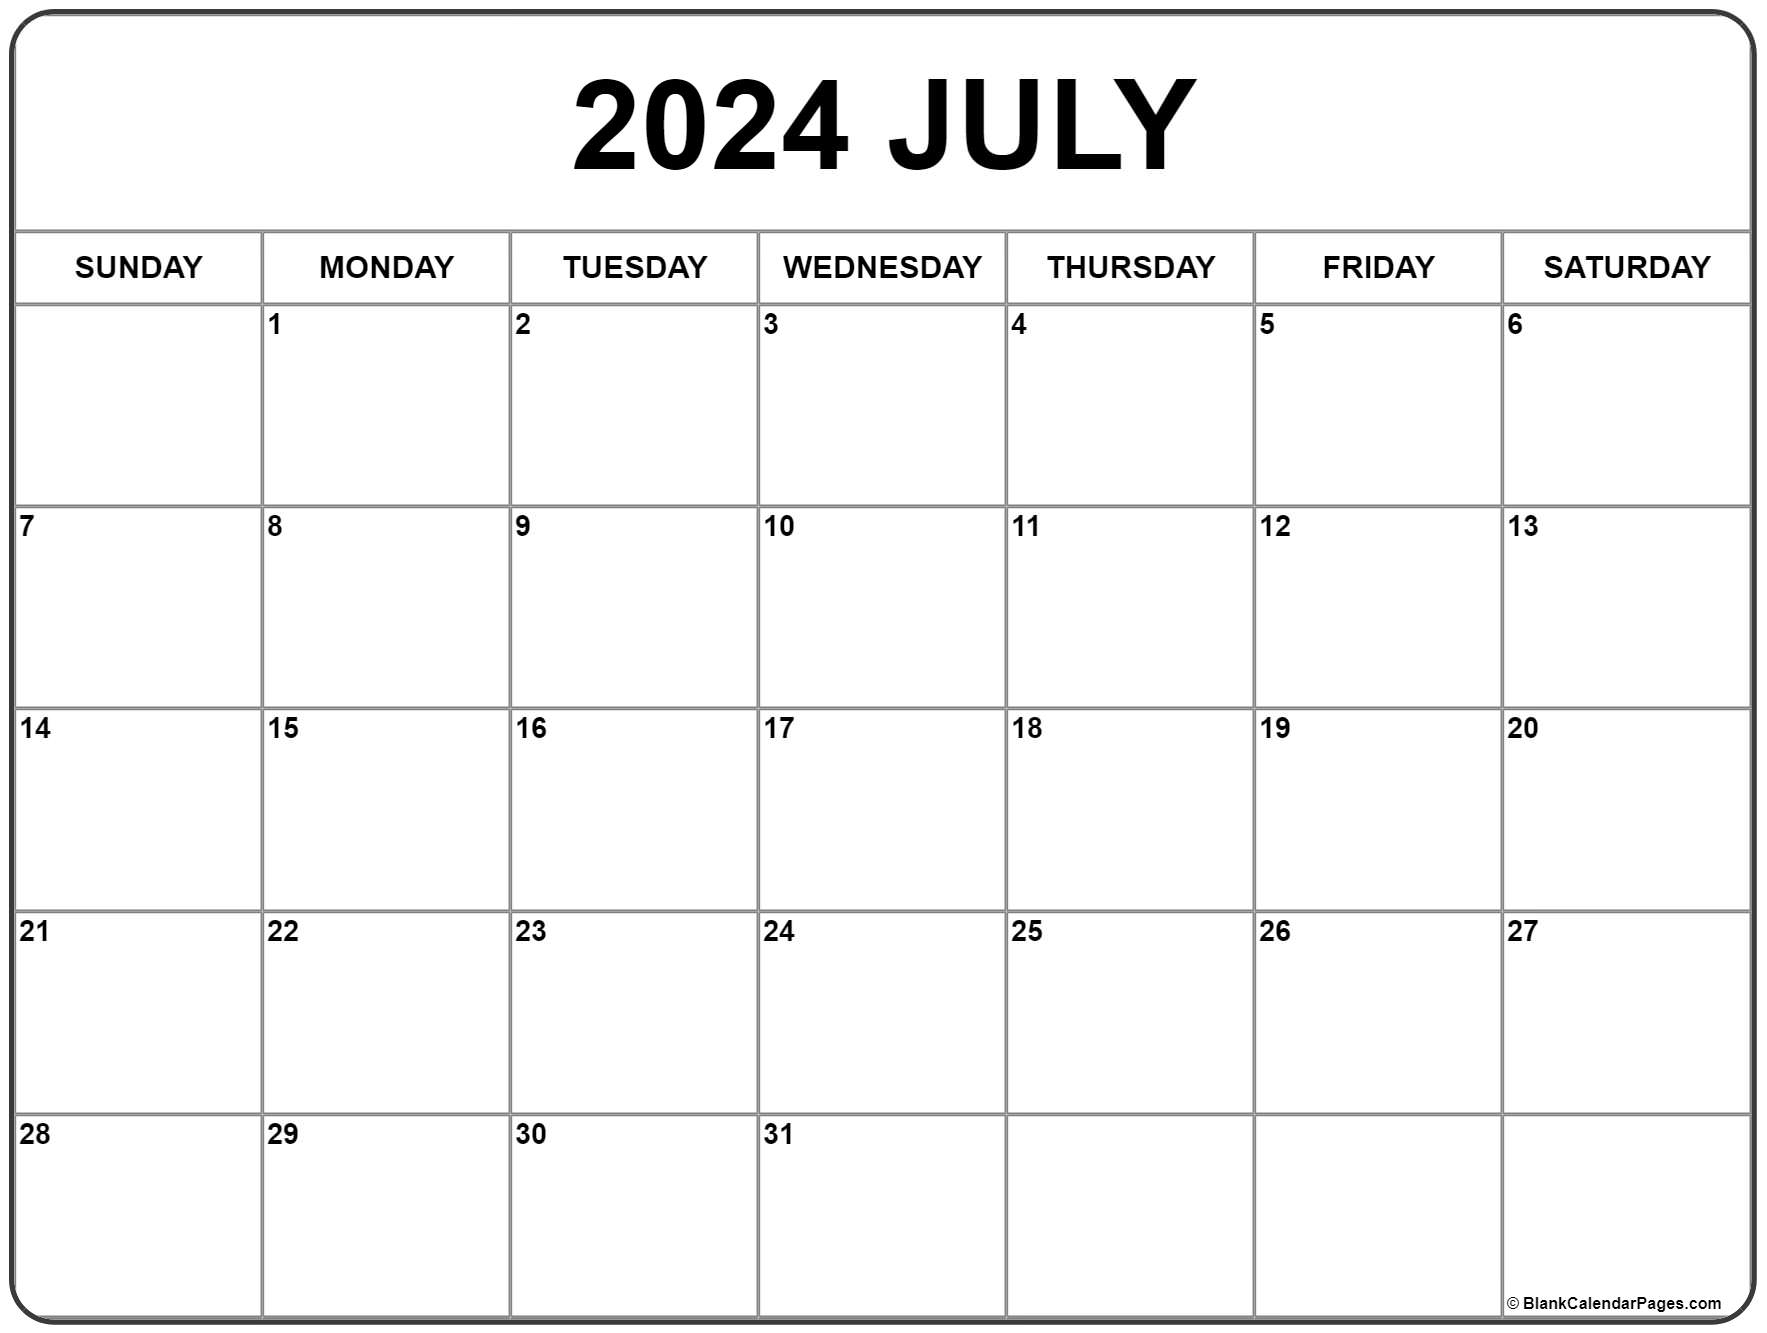 June July 2022 Calendar Printable July 2022 Calendar | Free Printable Calendar Templates